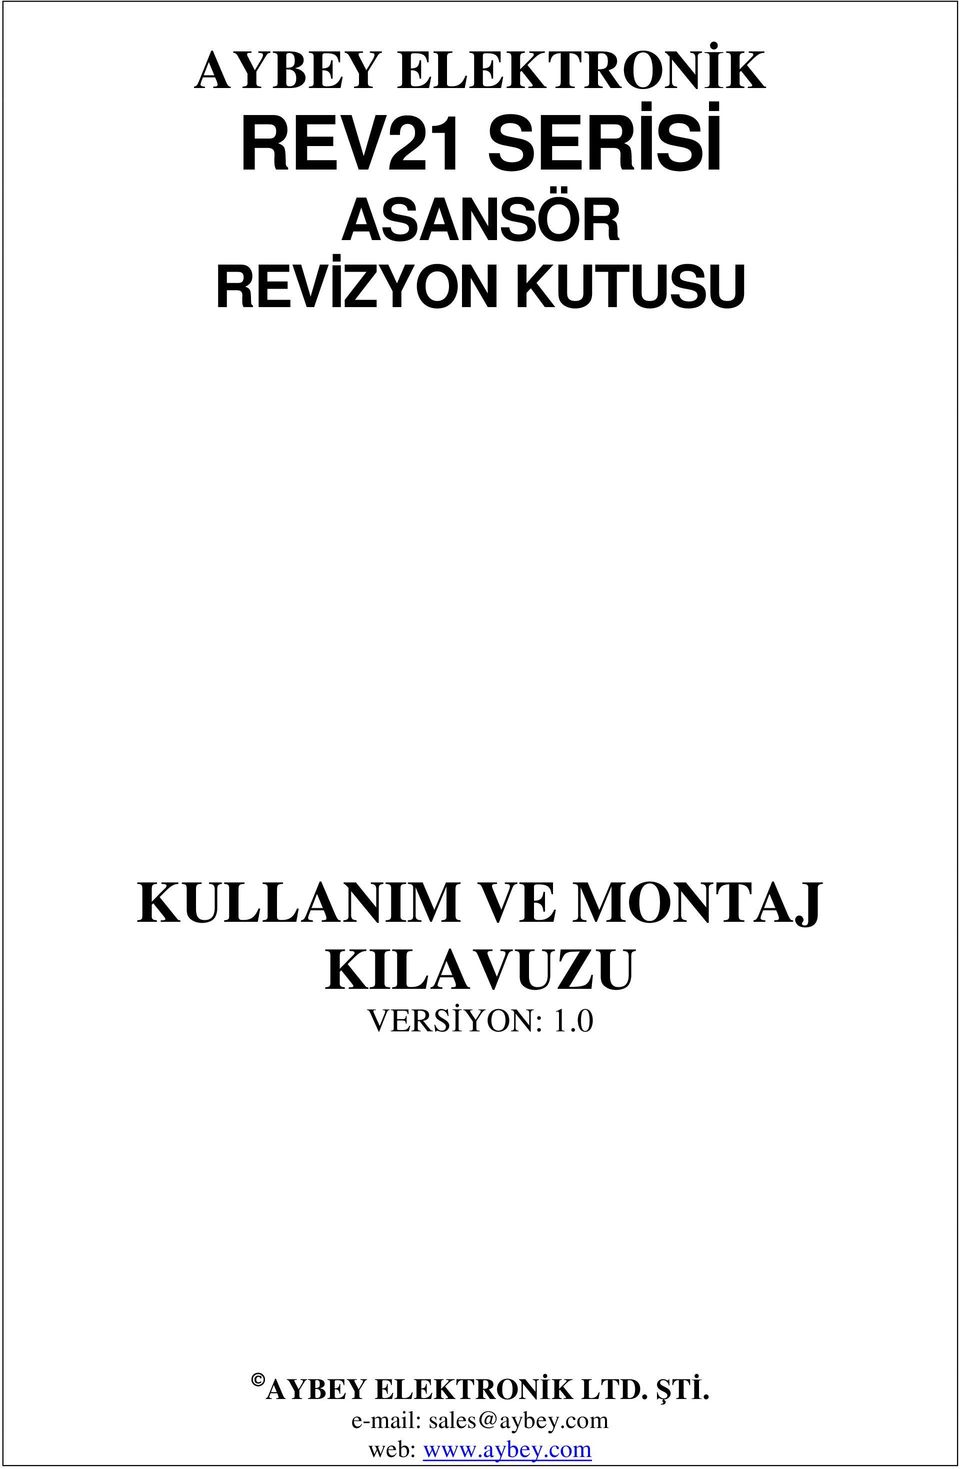 KILAVUZU VERSYON:.